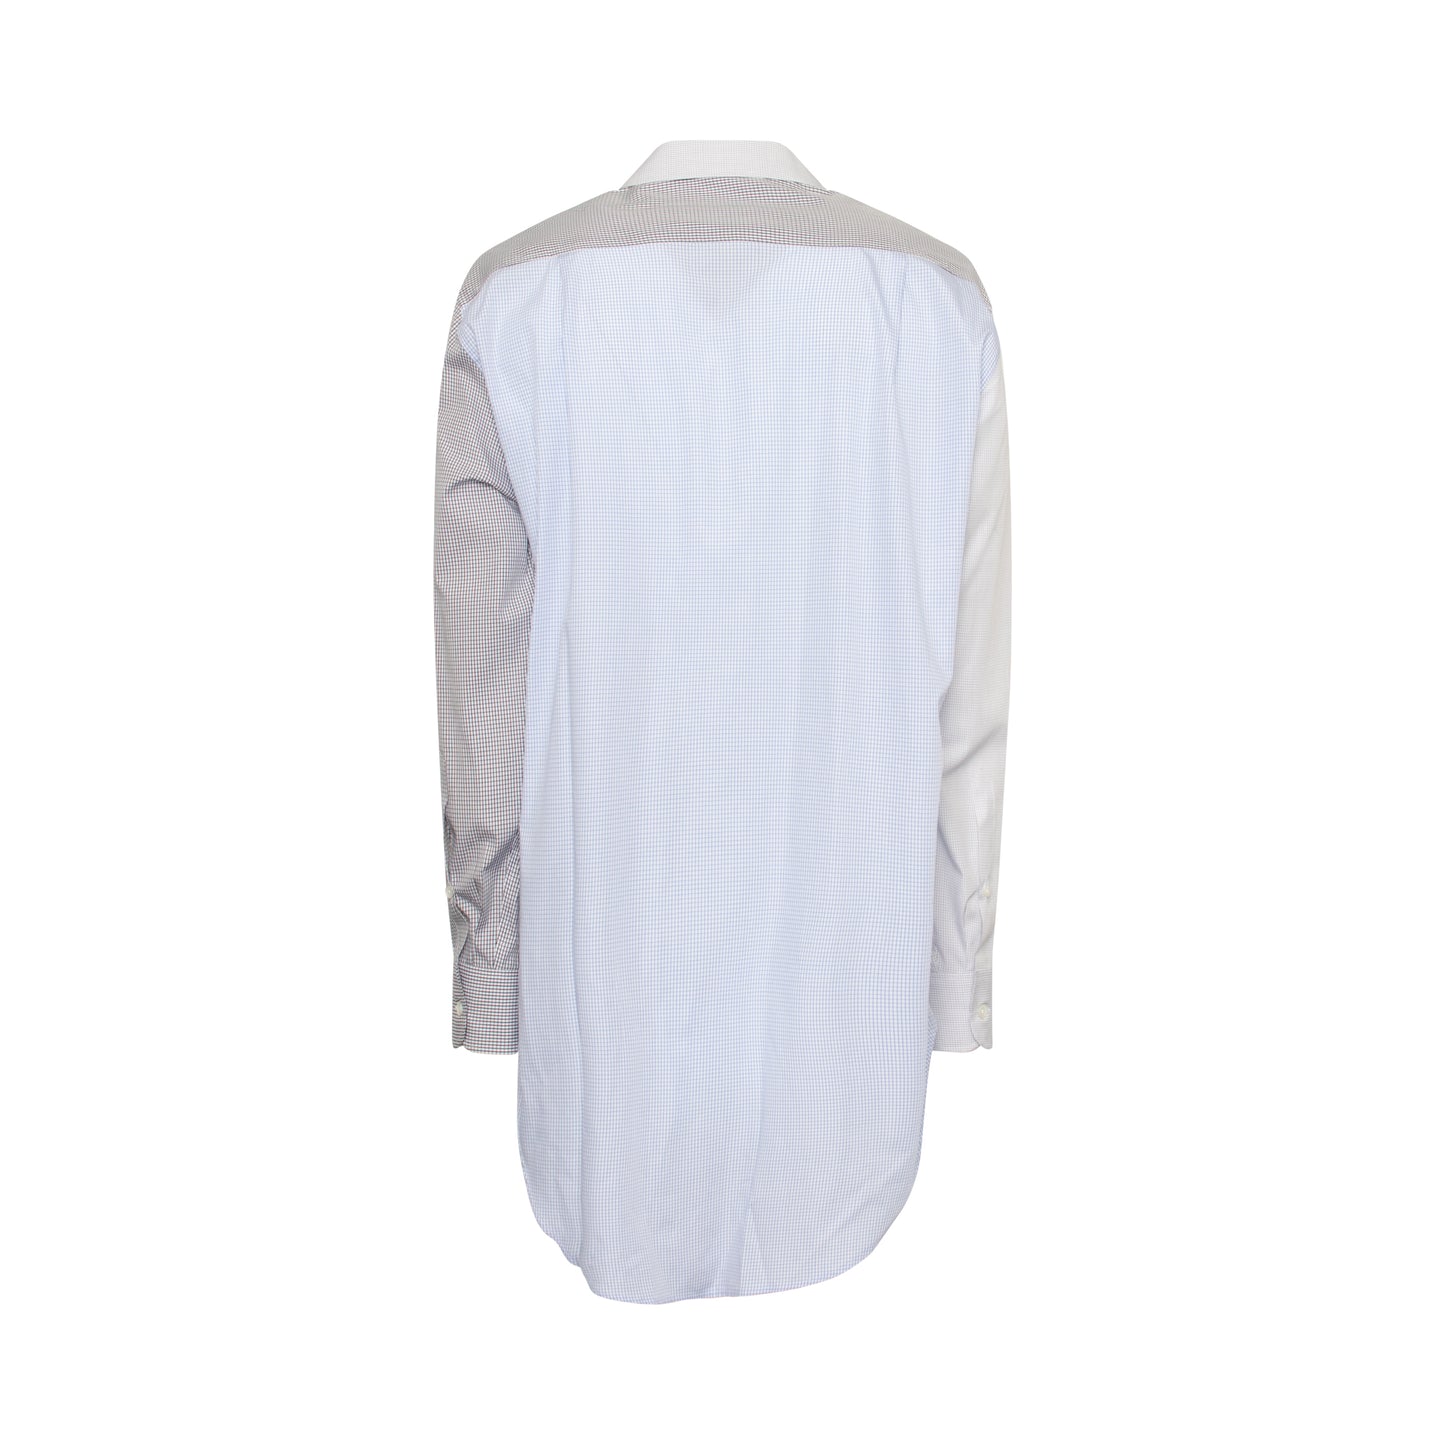 Loewe Patchwork Shirt in White